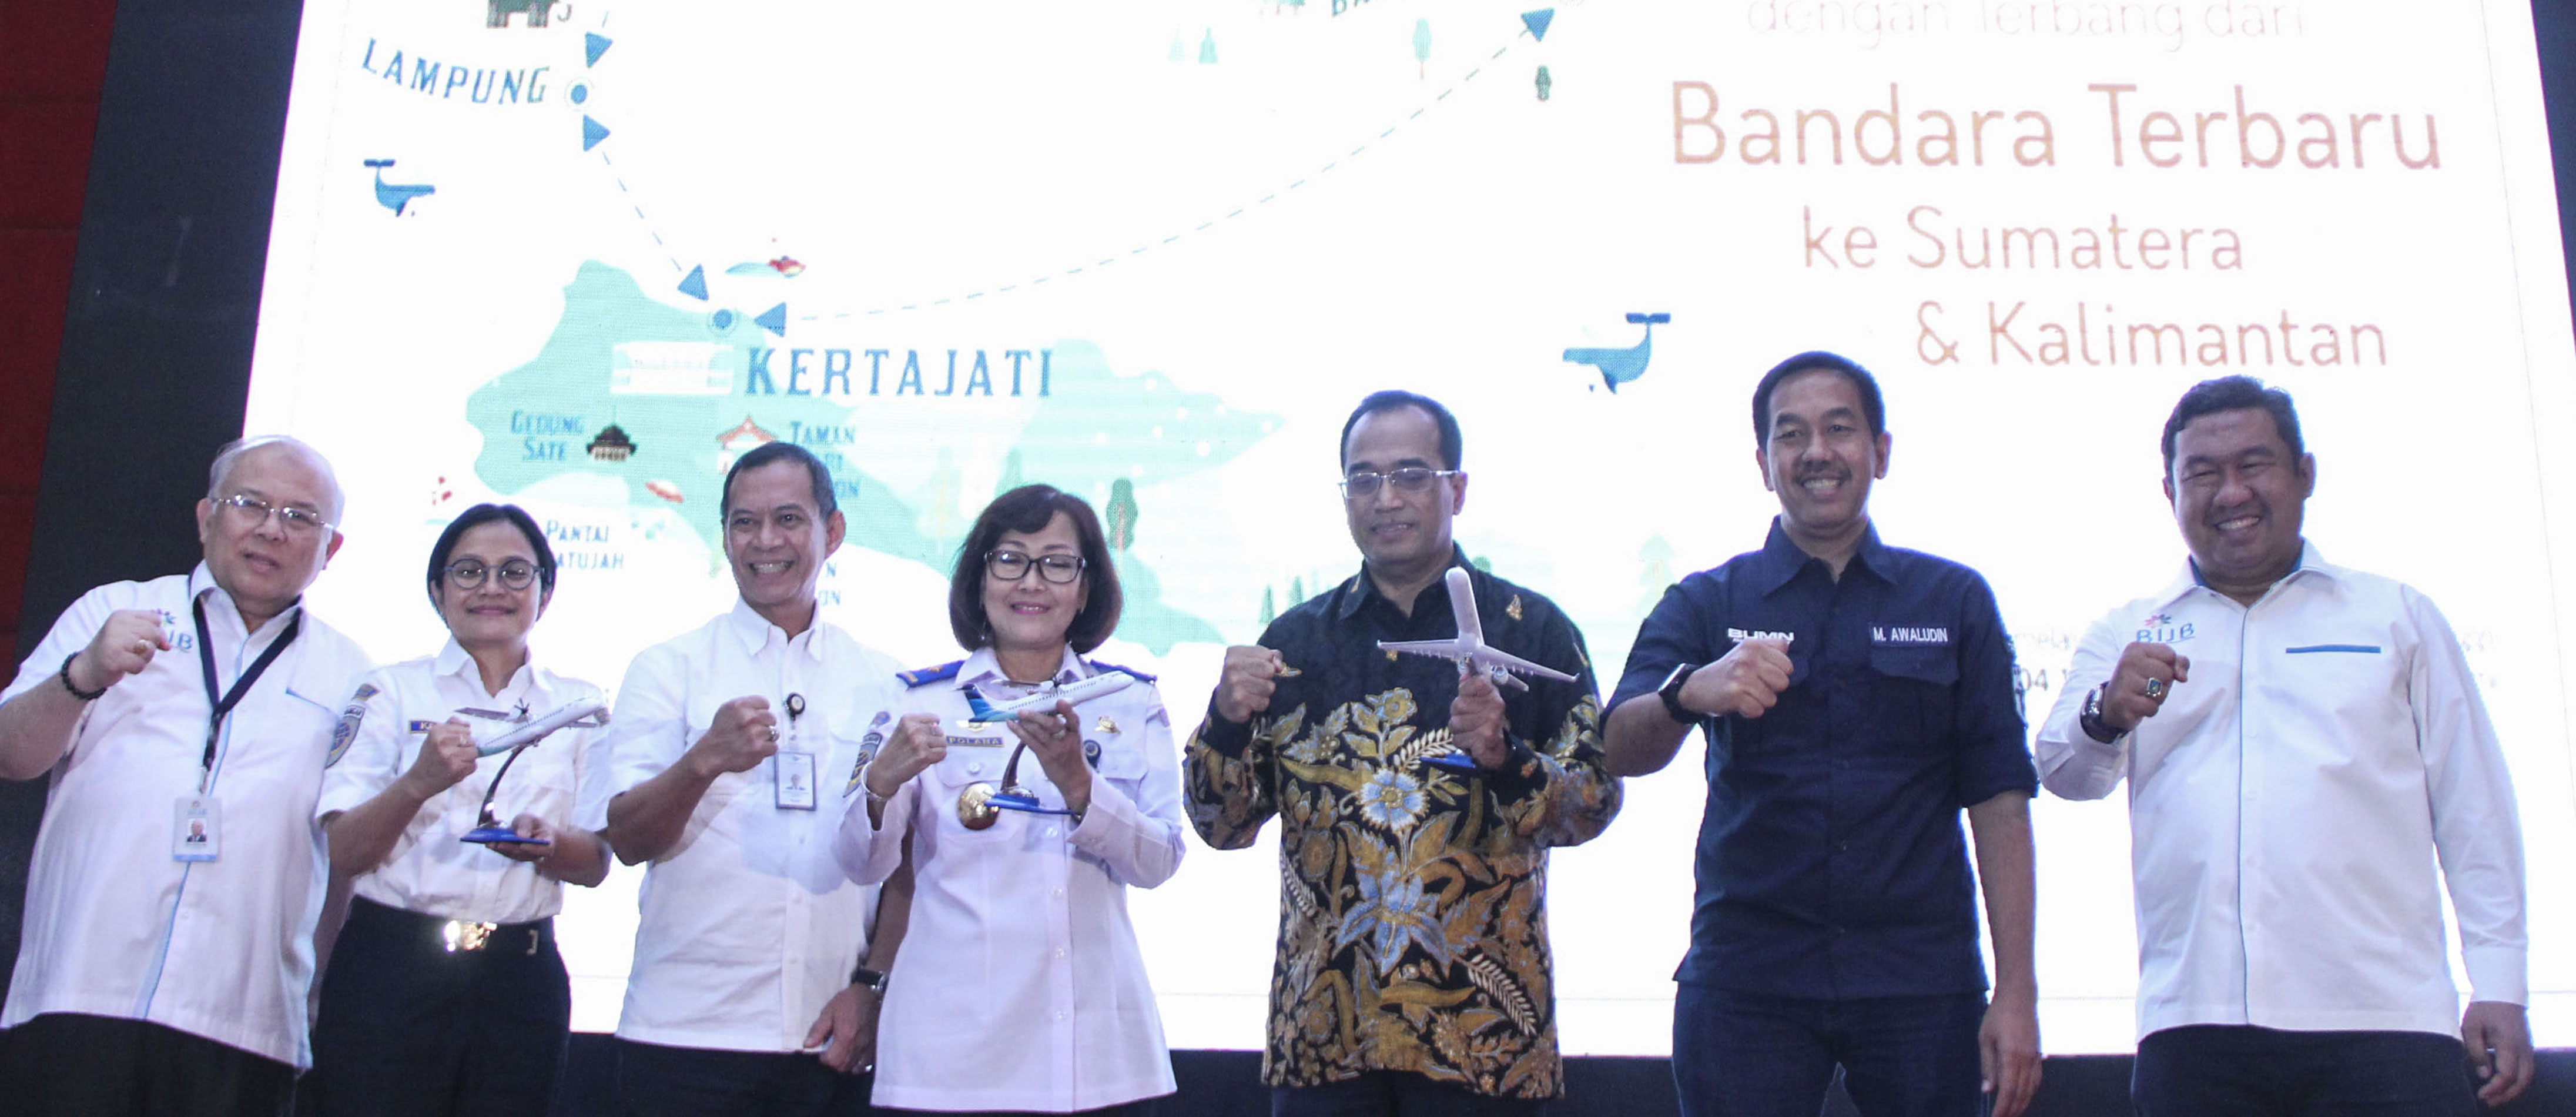 Segera Layani Penerbangan dari Bandara Kertajati, Garuda Indonesia Perkenalkan Rute Kertajati - Balikpapan - Tarakan PP dan Rute Kertajati - Tanjung Karang - Palembang PP